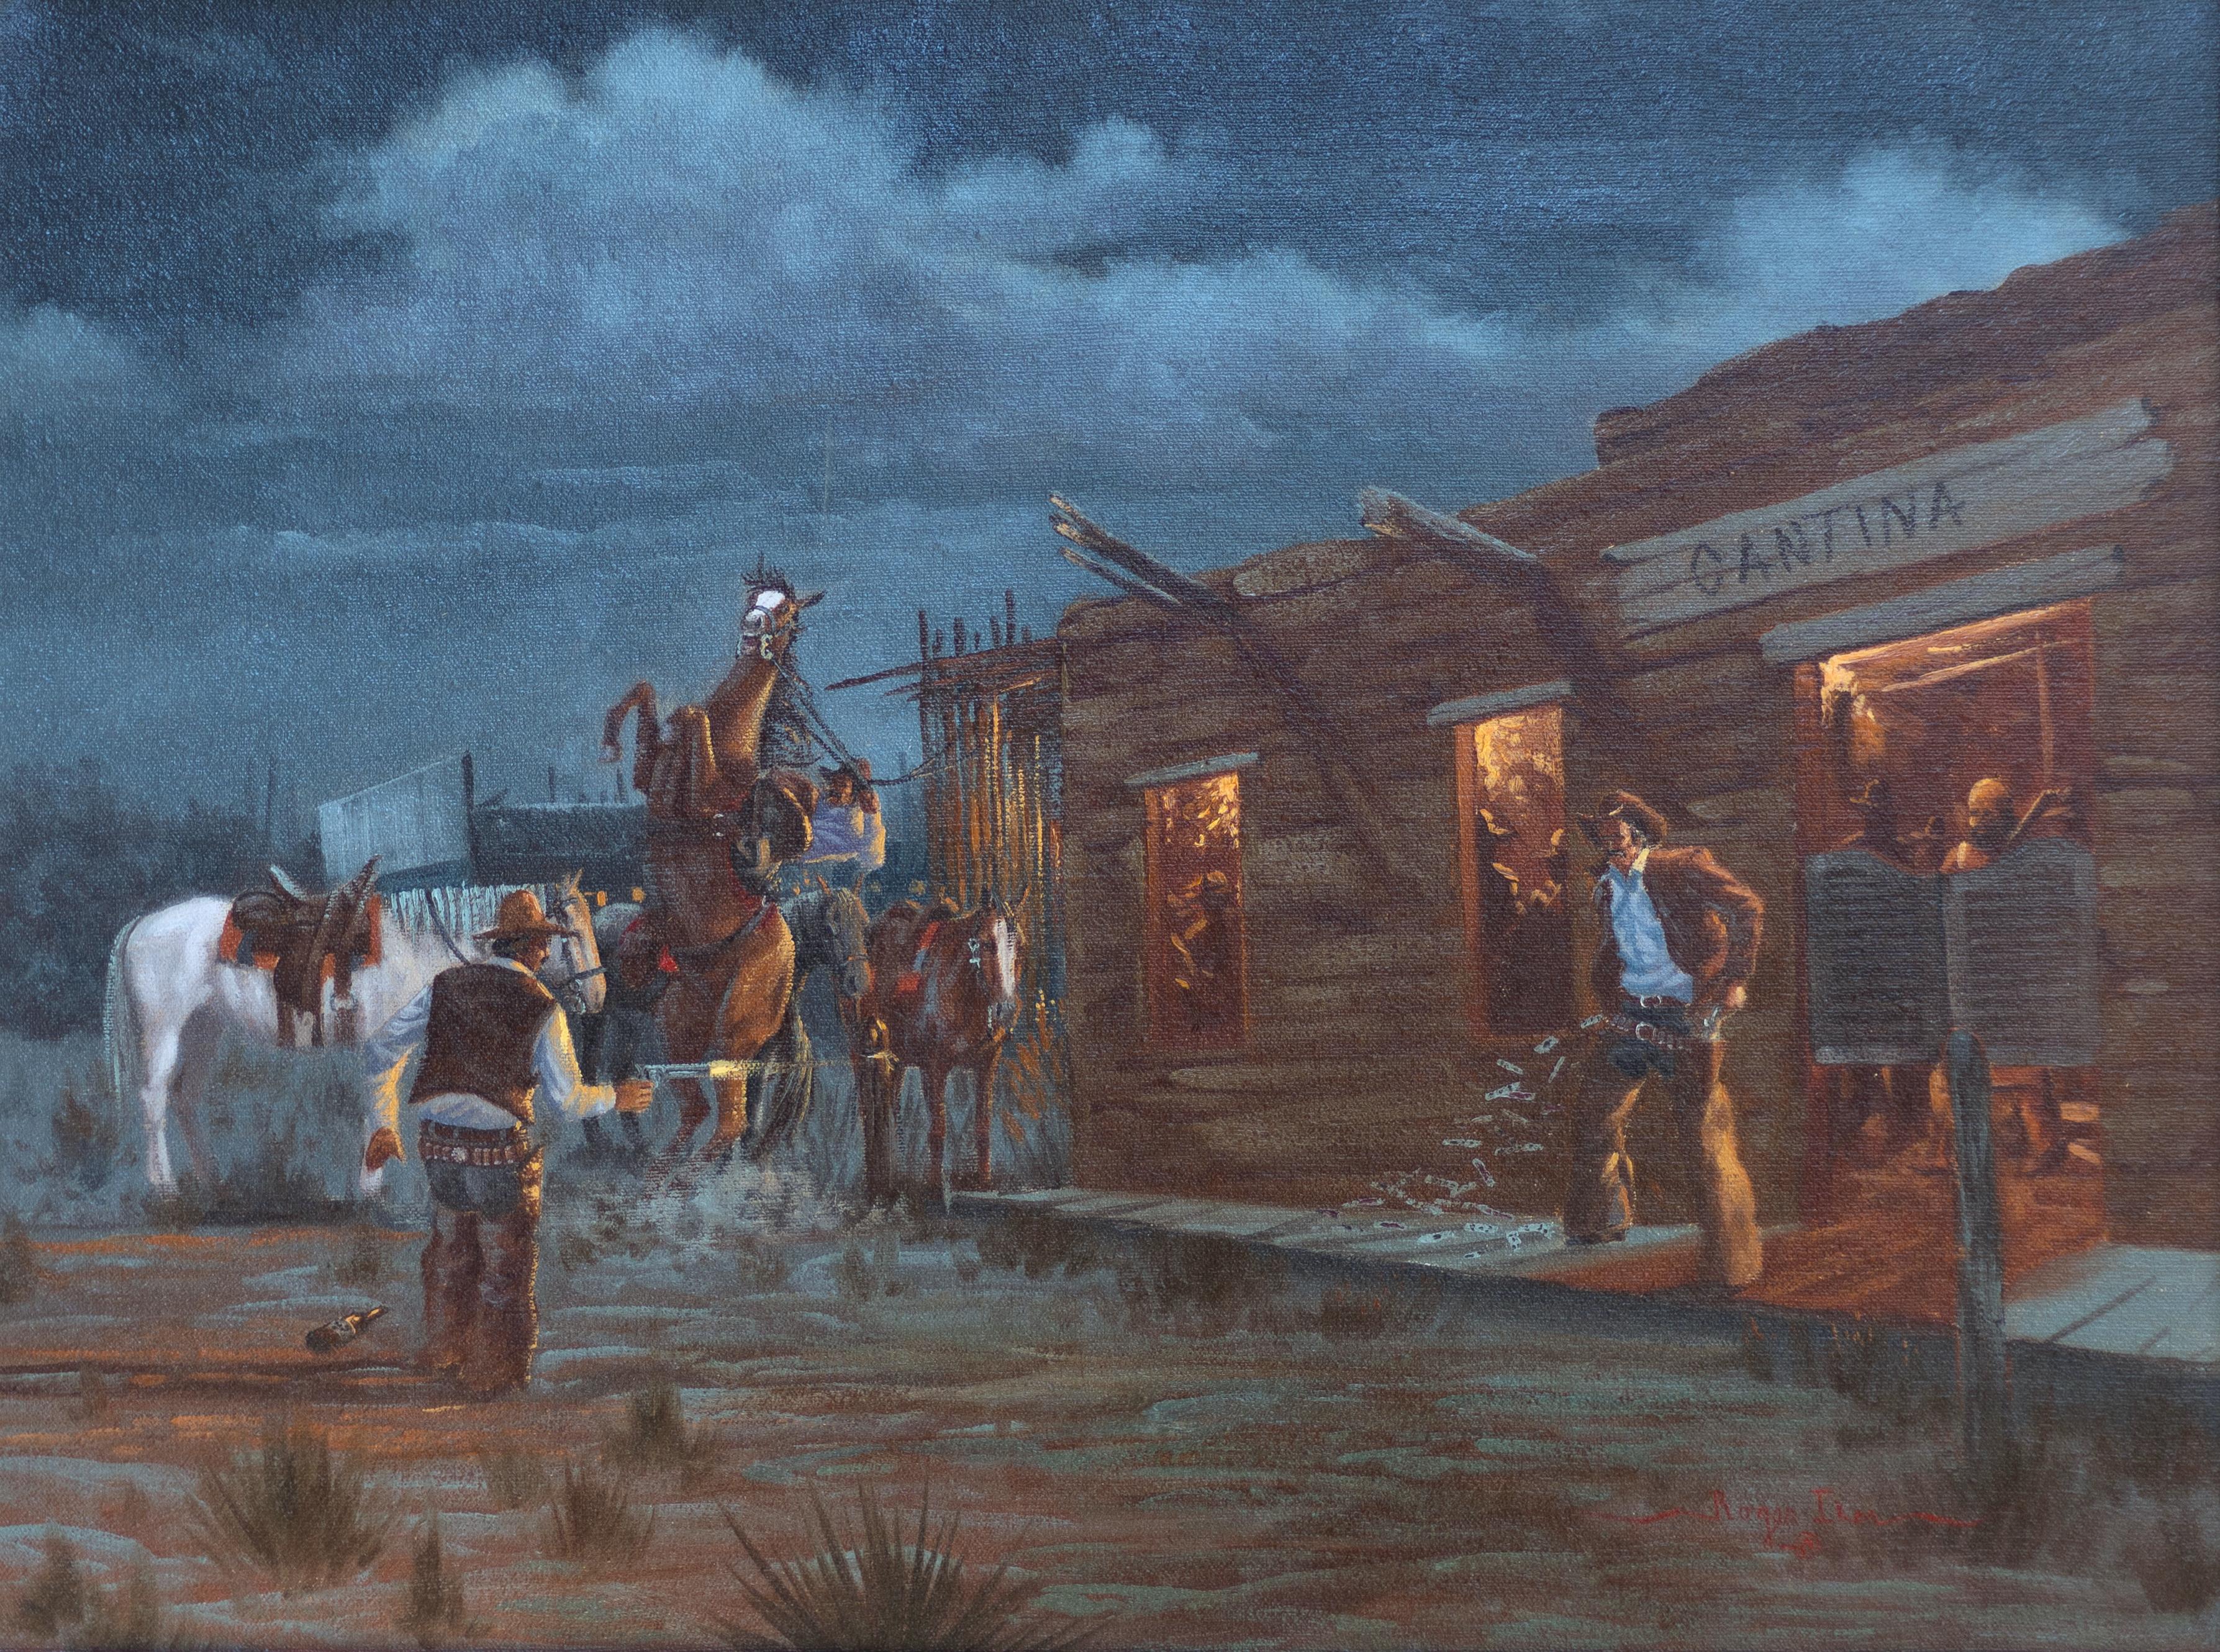 Roger Iker Figurative Painting - "Cantina Gunfight" Western Romanticist Cowboy Scene